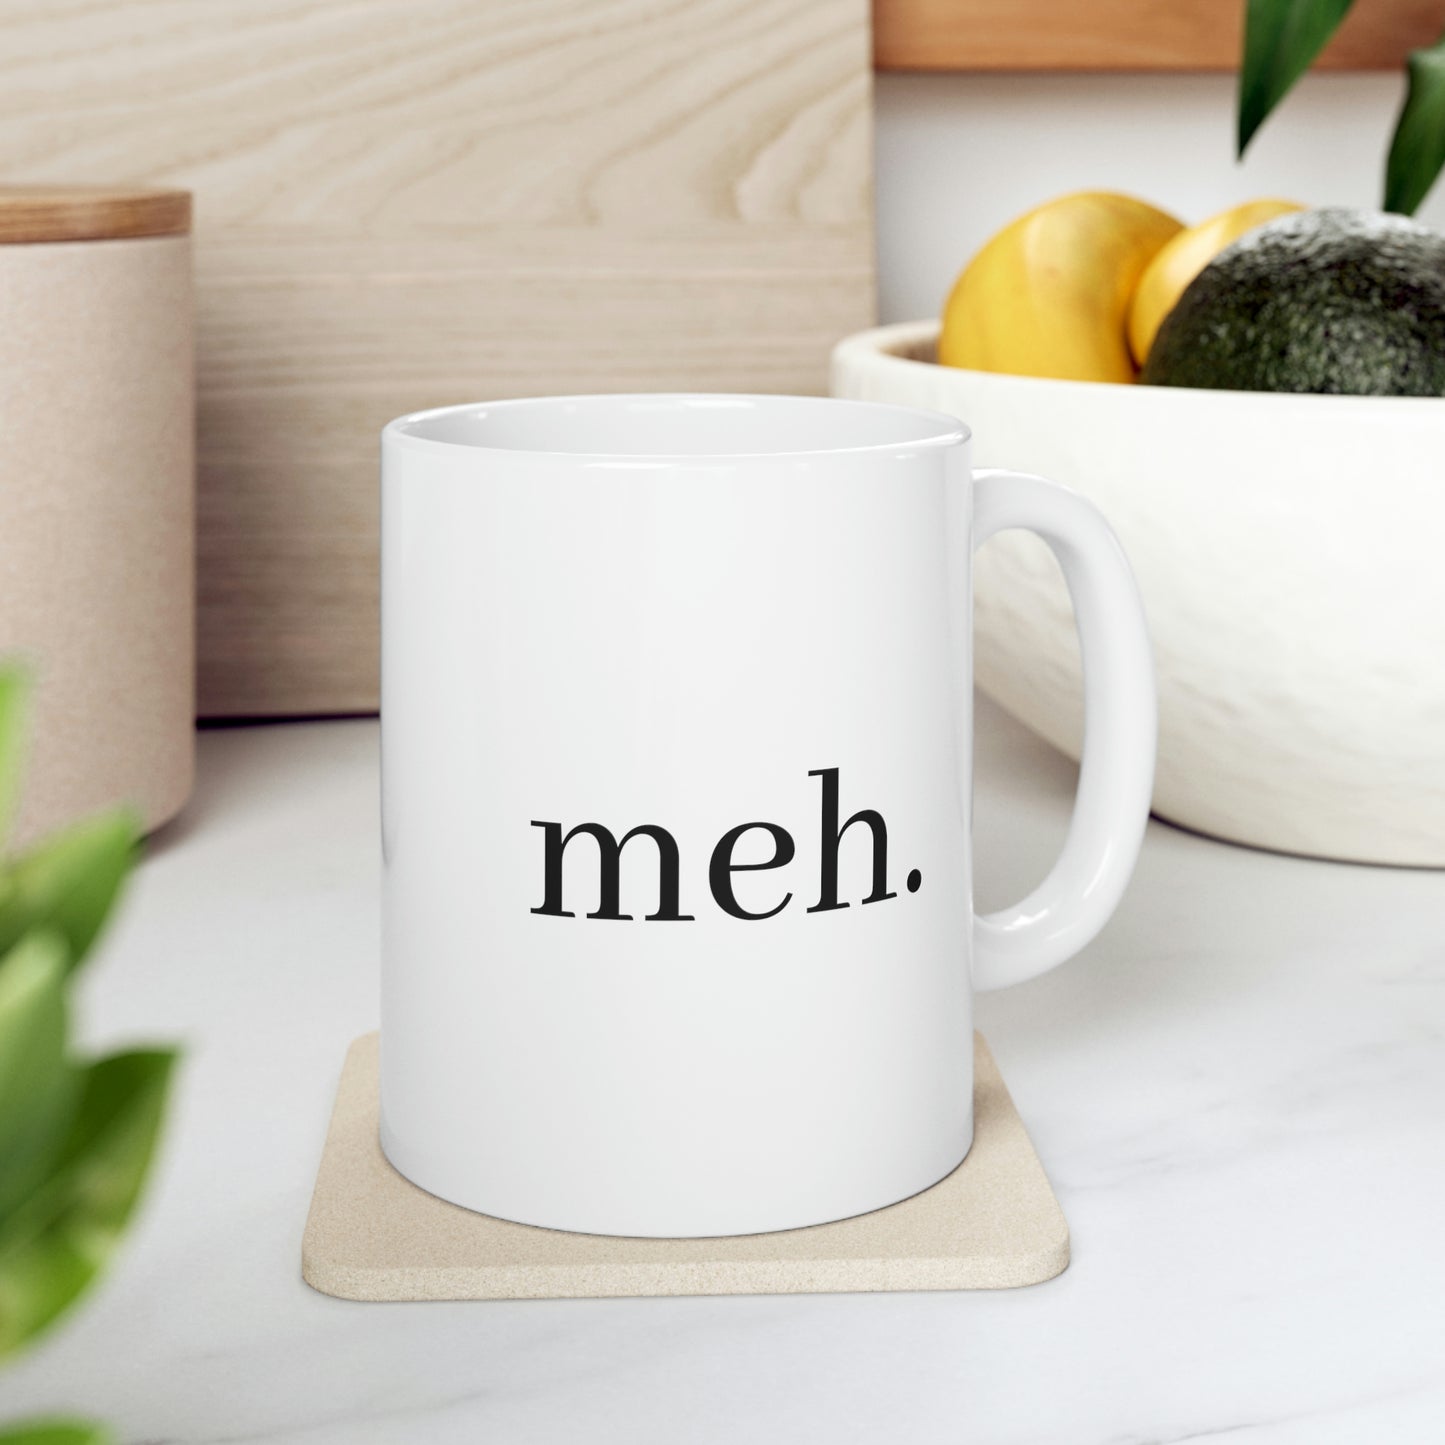 Meh. Mug